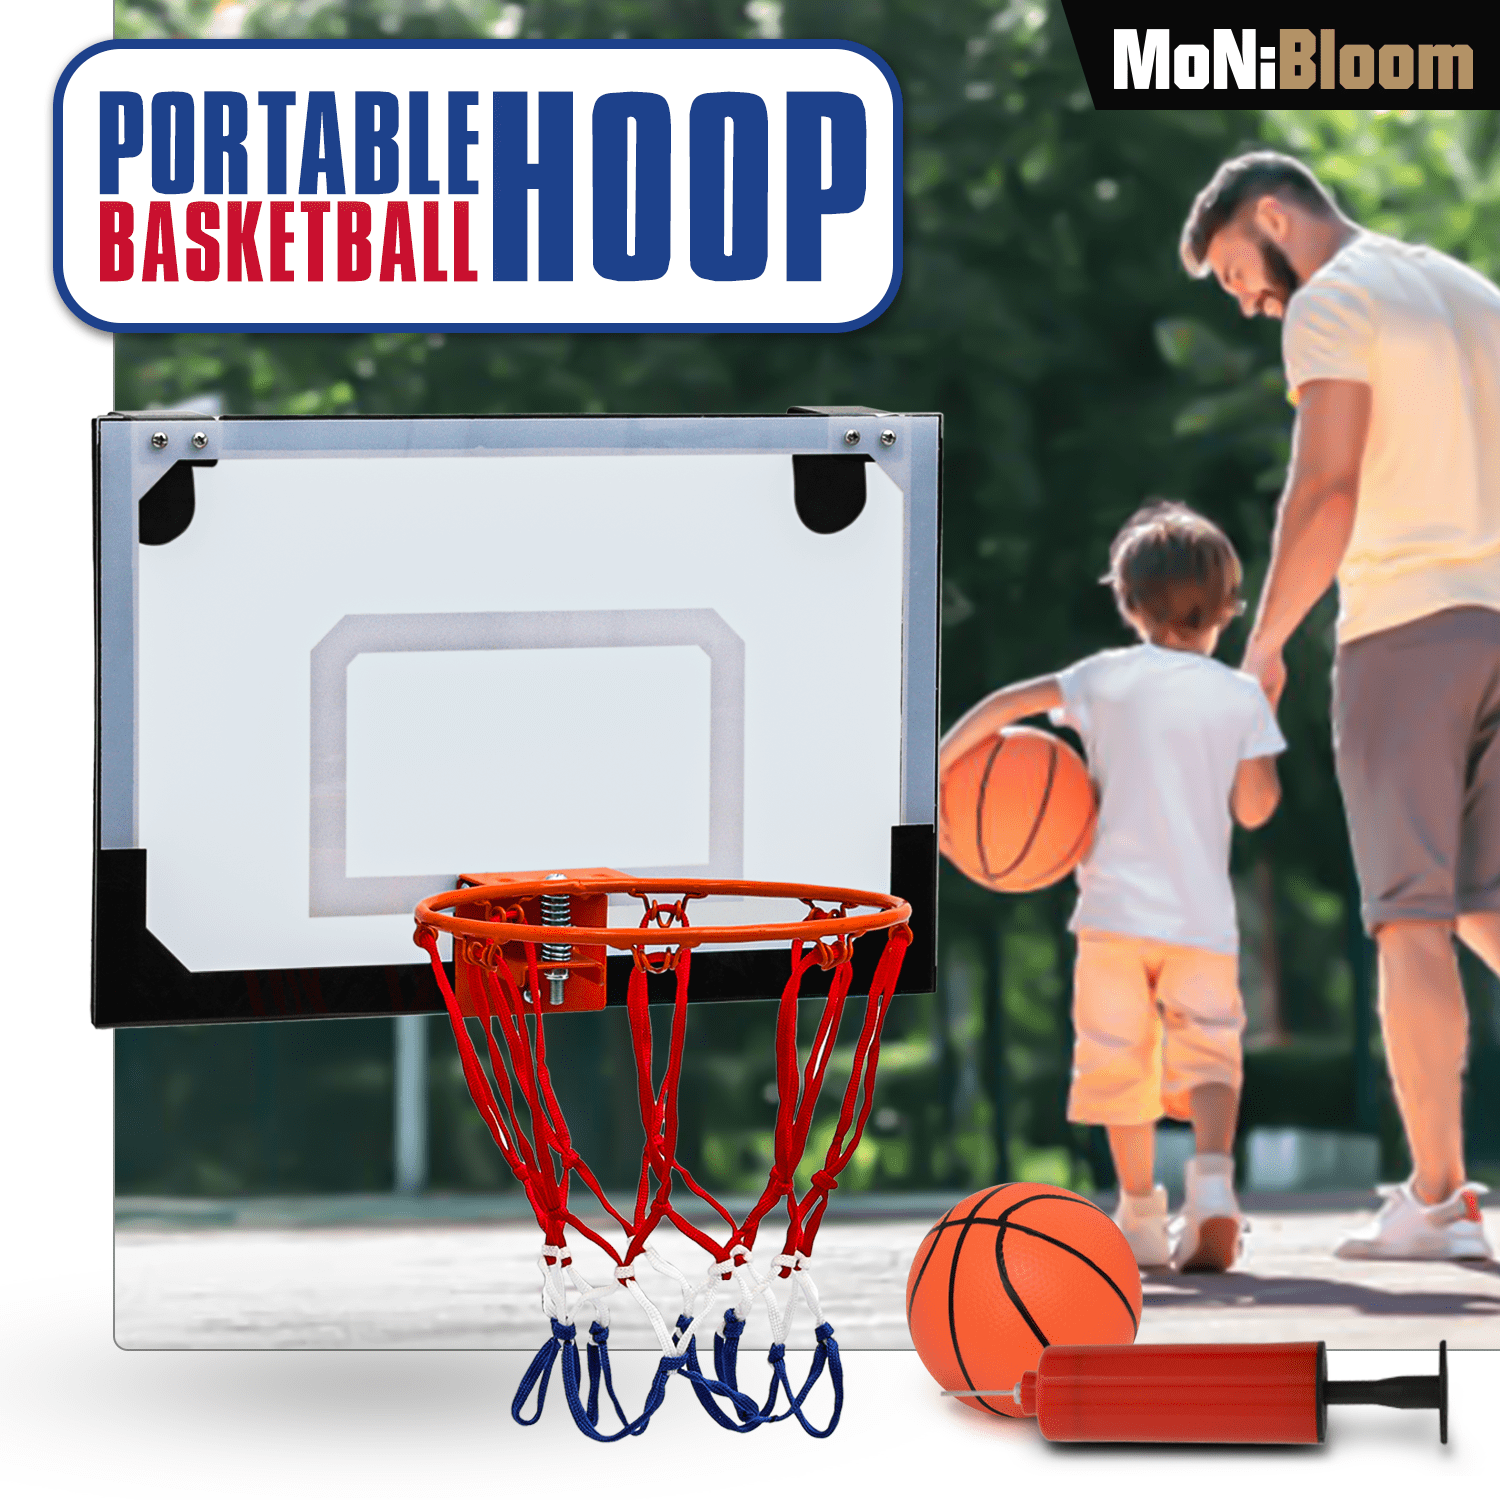 HYG Toys Indoor Mini Basketball Hoop Set for Kids and Adults Bedroom  Basketball Hoop for Door & Wall…See more HYG Toys Indoor Mini Basketball  Hoop Set